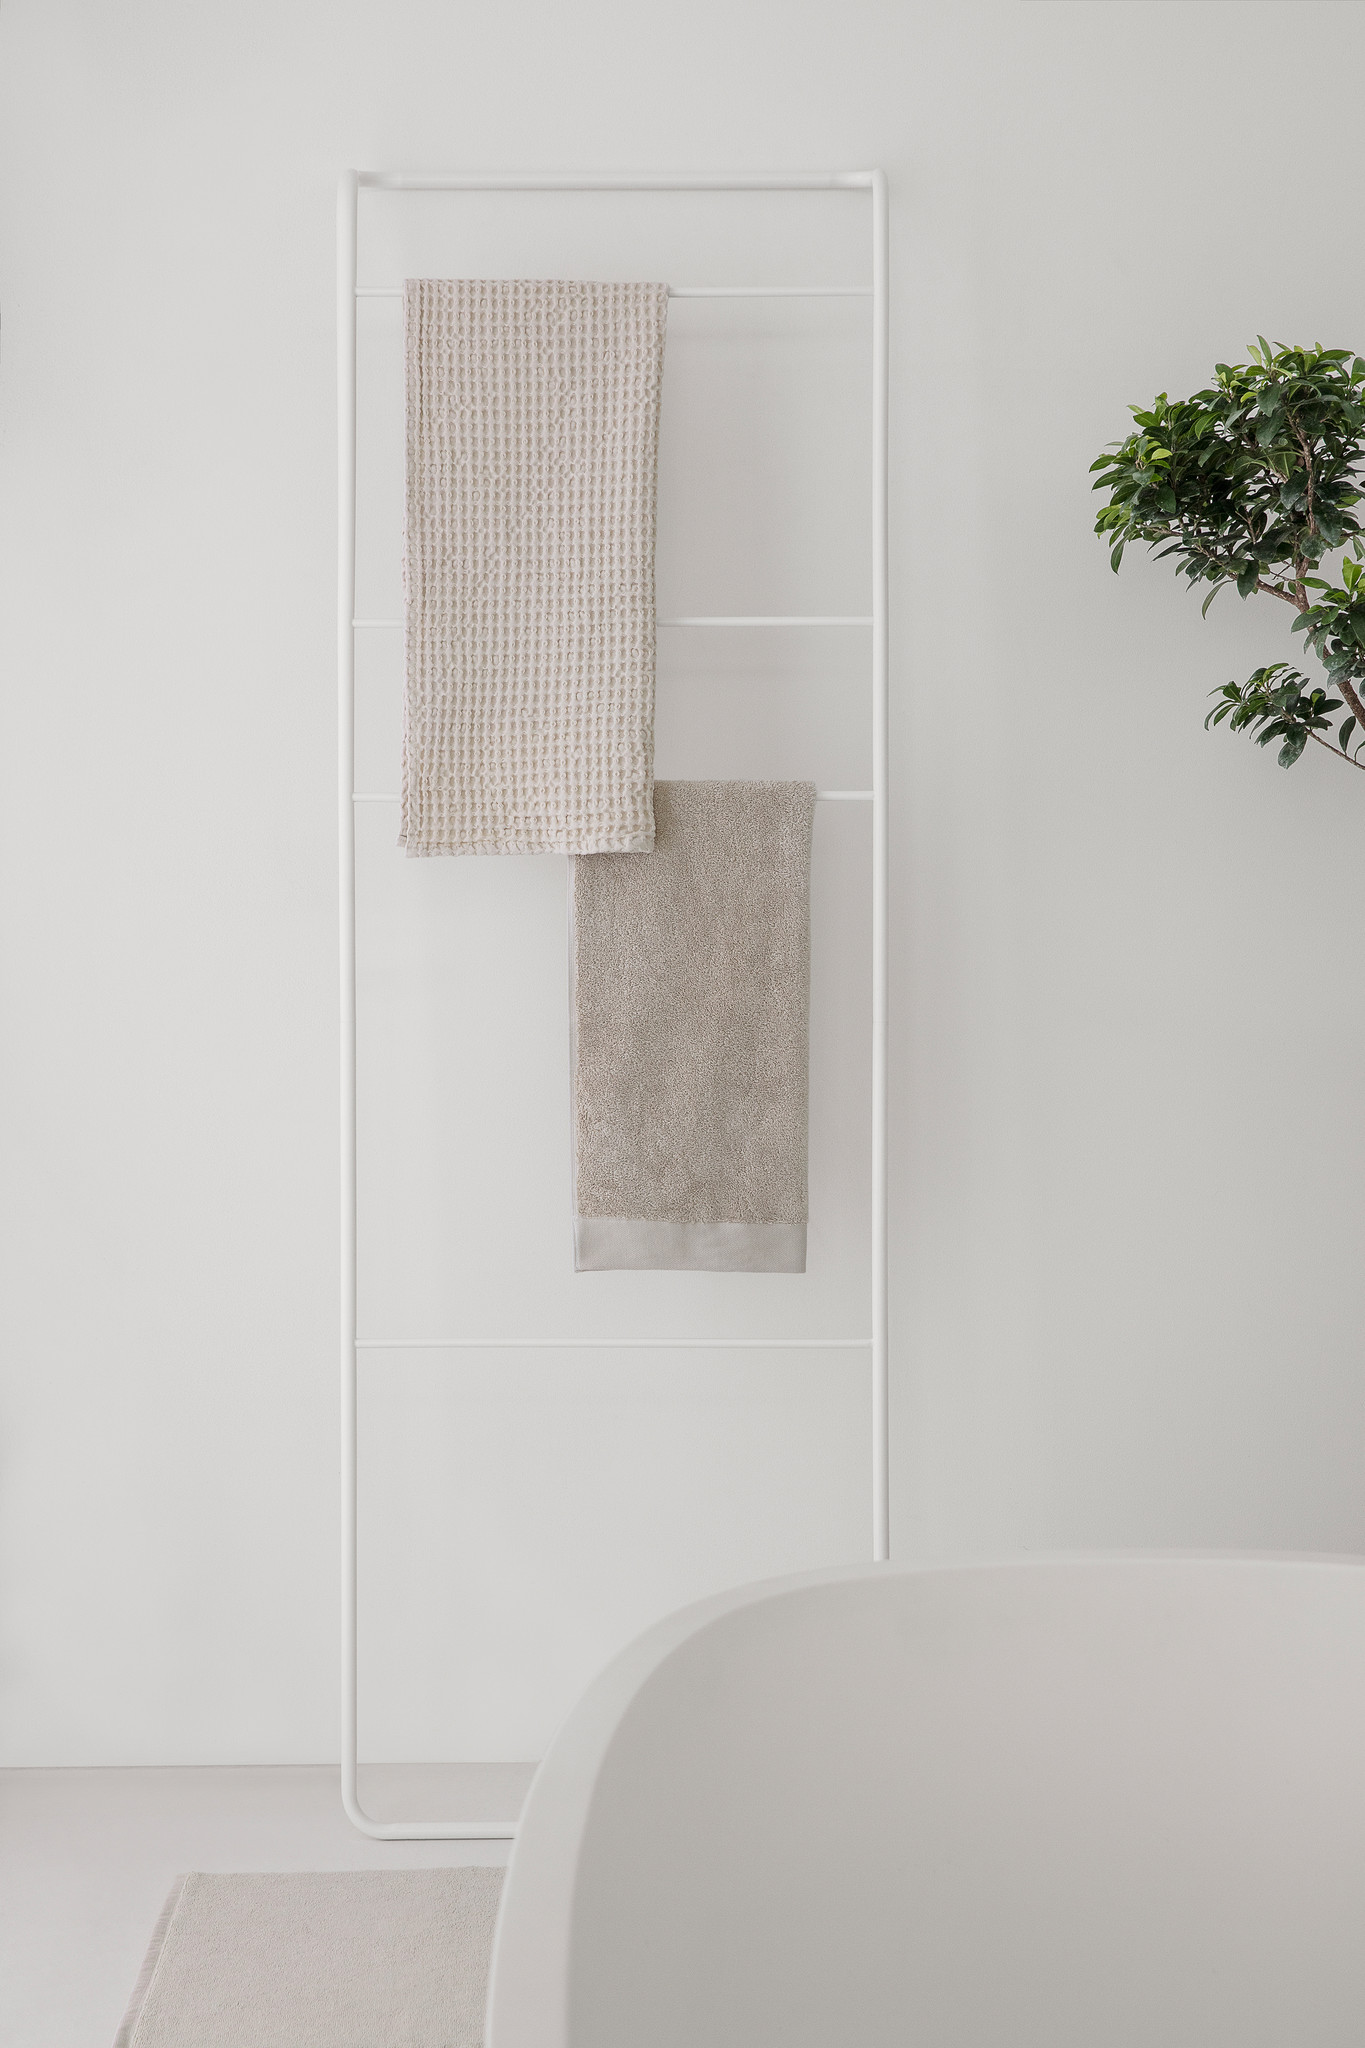 Broek Overdreven Geelachtig Blomus handdoekladder MODO wit (66272) - hoogte 170 cm - Bath & Living